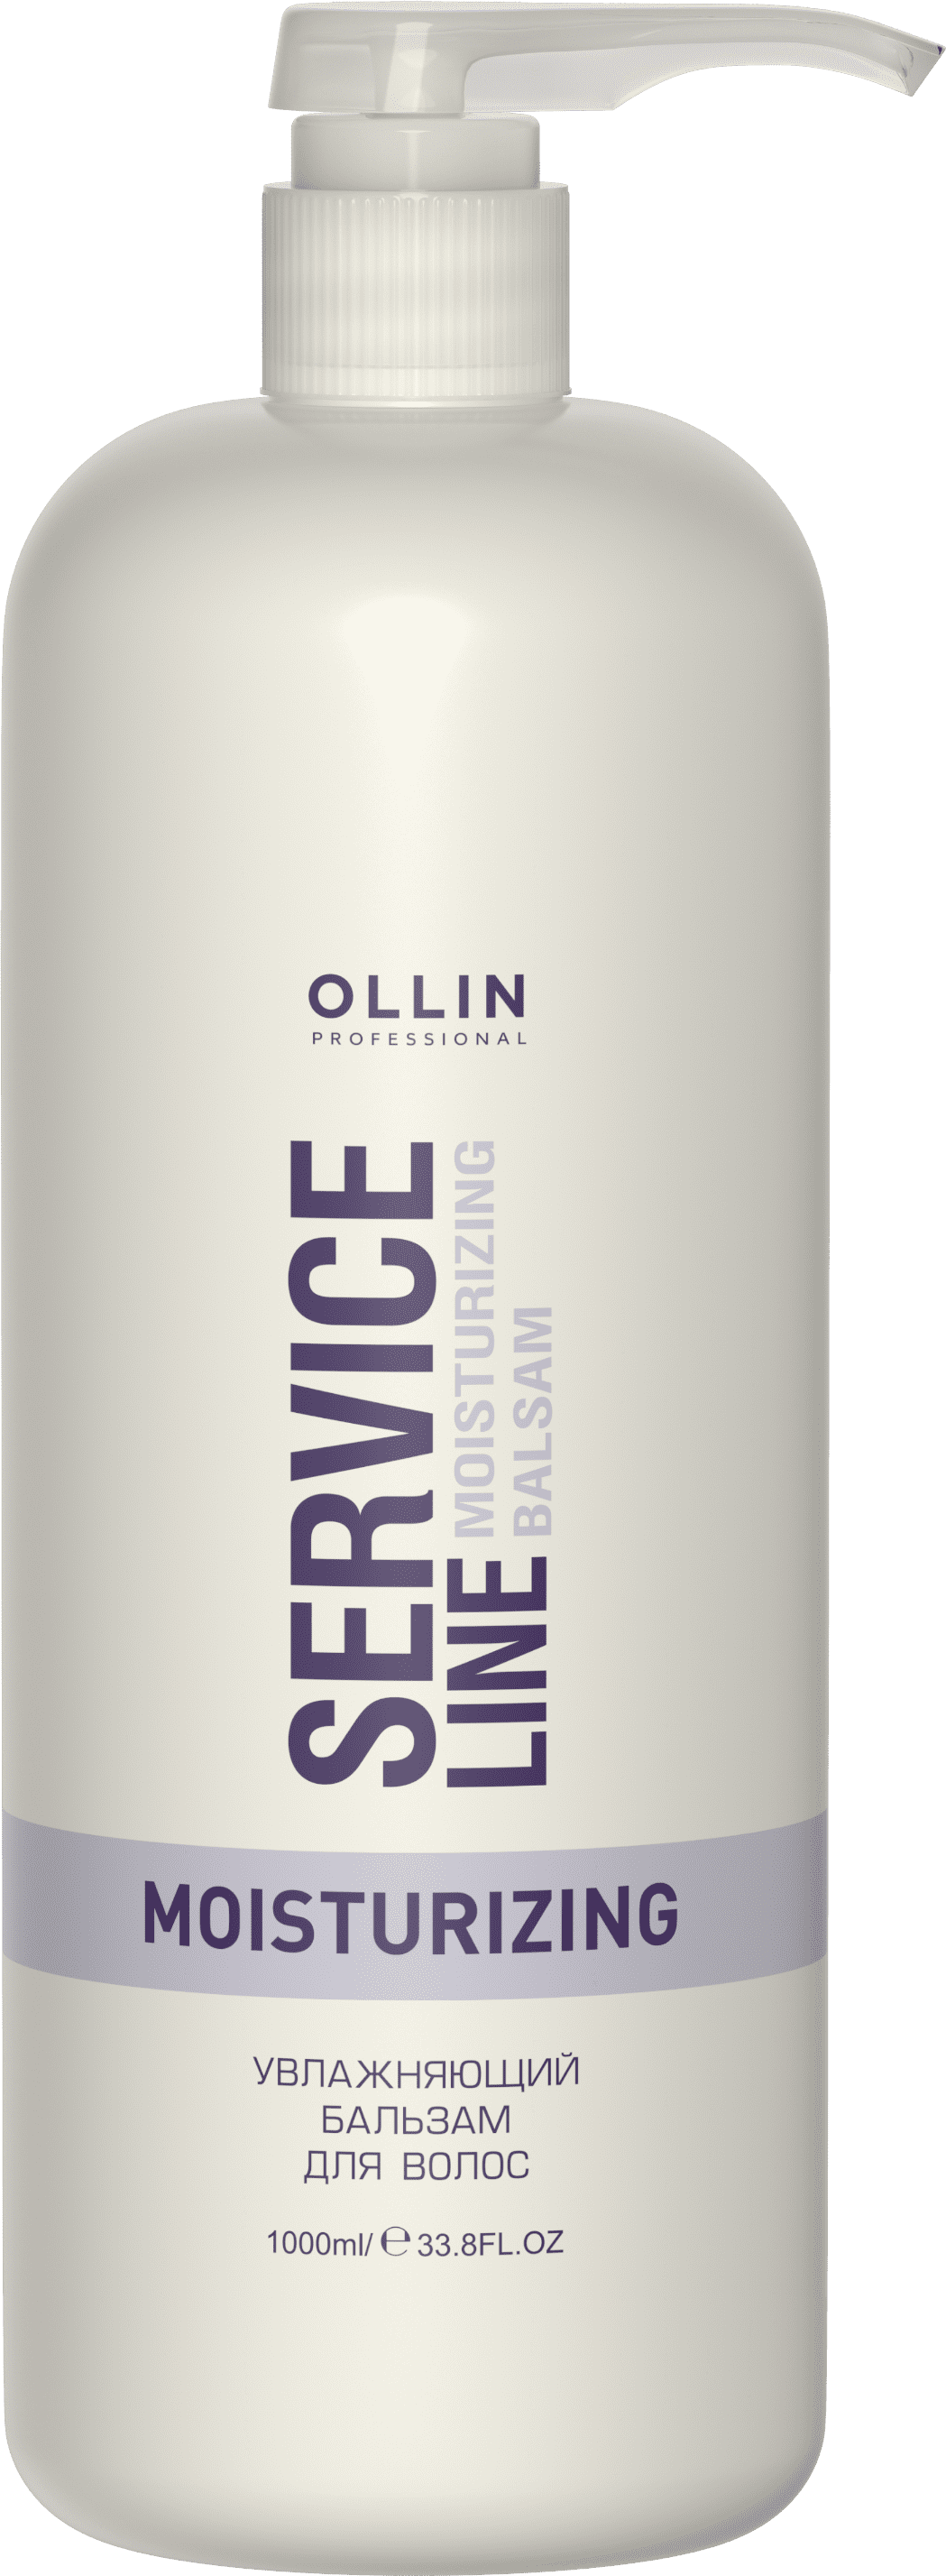 OLLIN SERVICE LINE Увлажняющий бальзам для волос 1000мл/ Moisturizing balsam